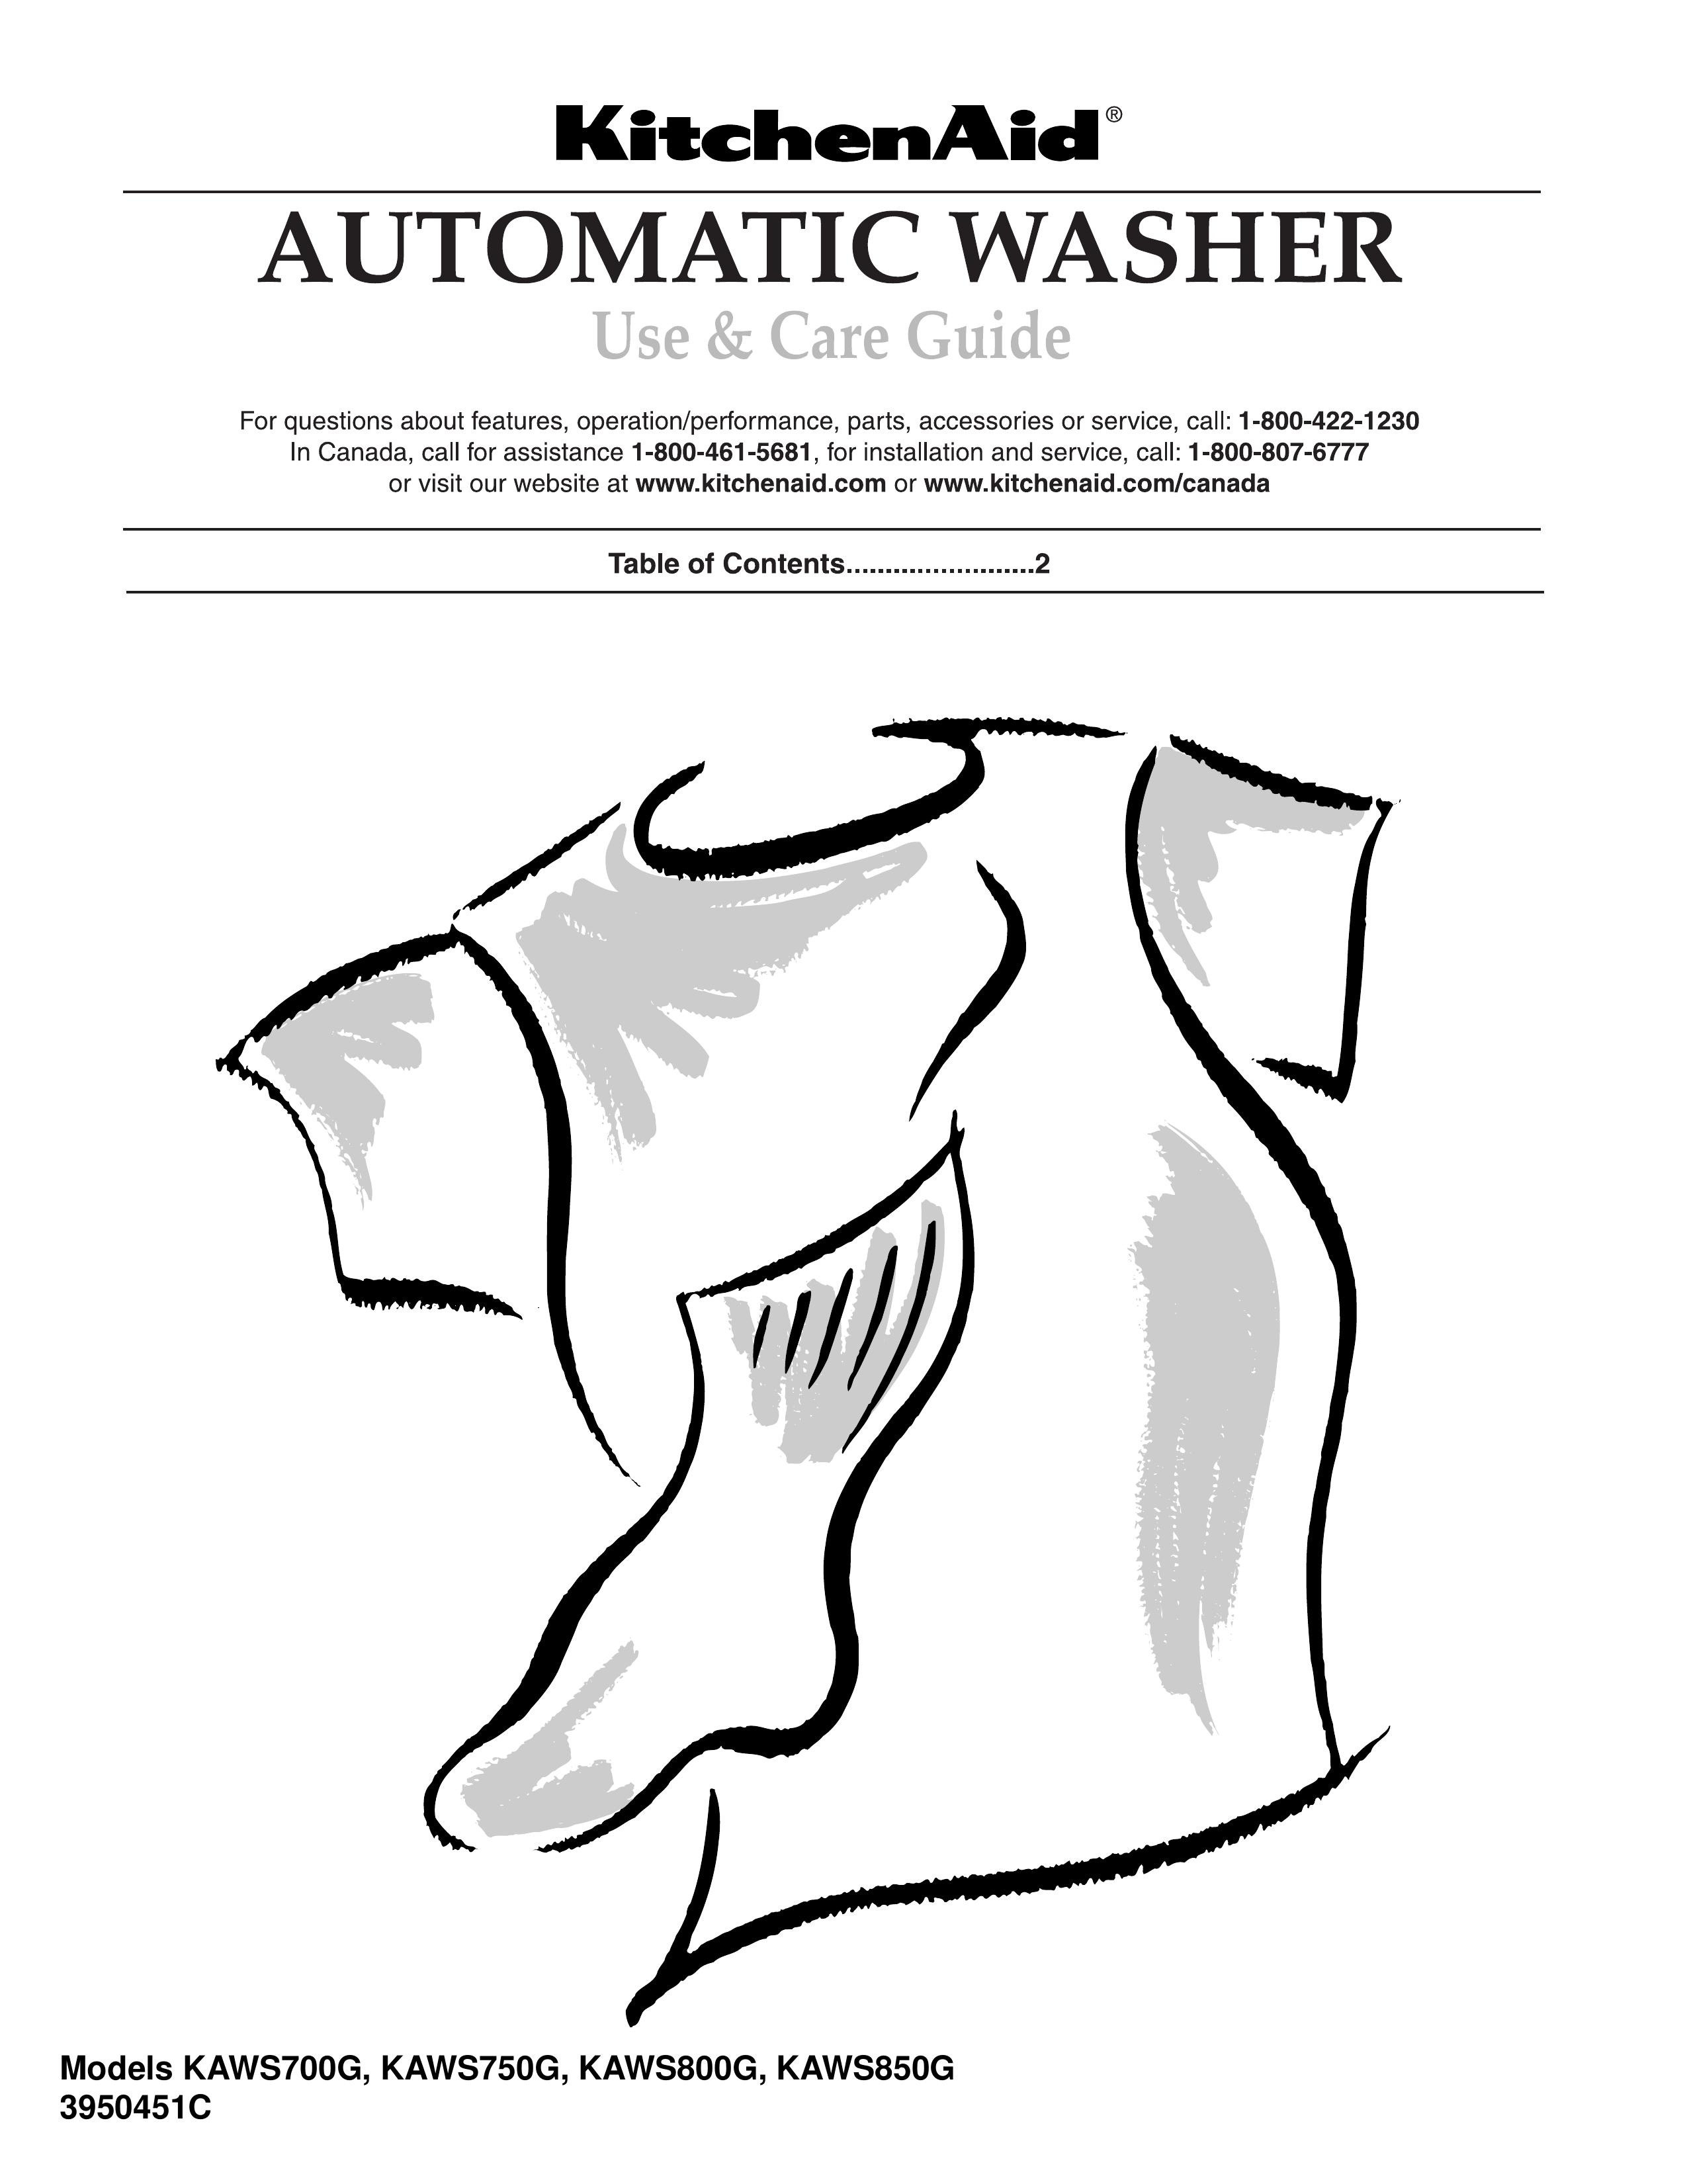 KitchenAid KAWS750G Washer/Dryer User Manual